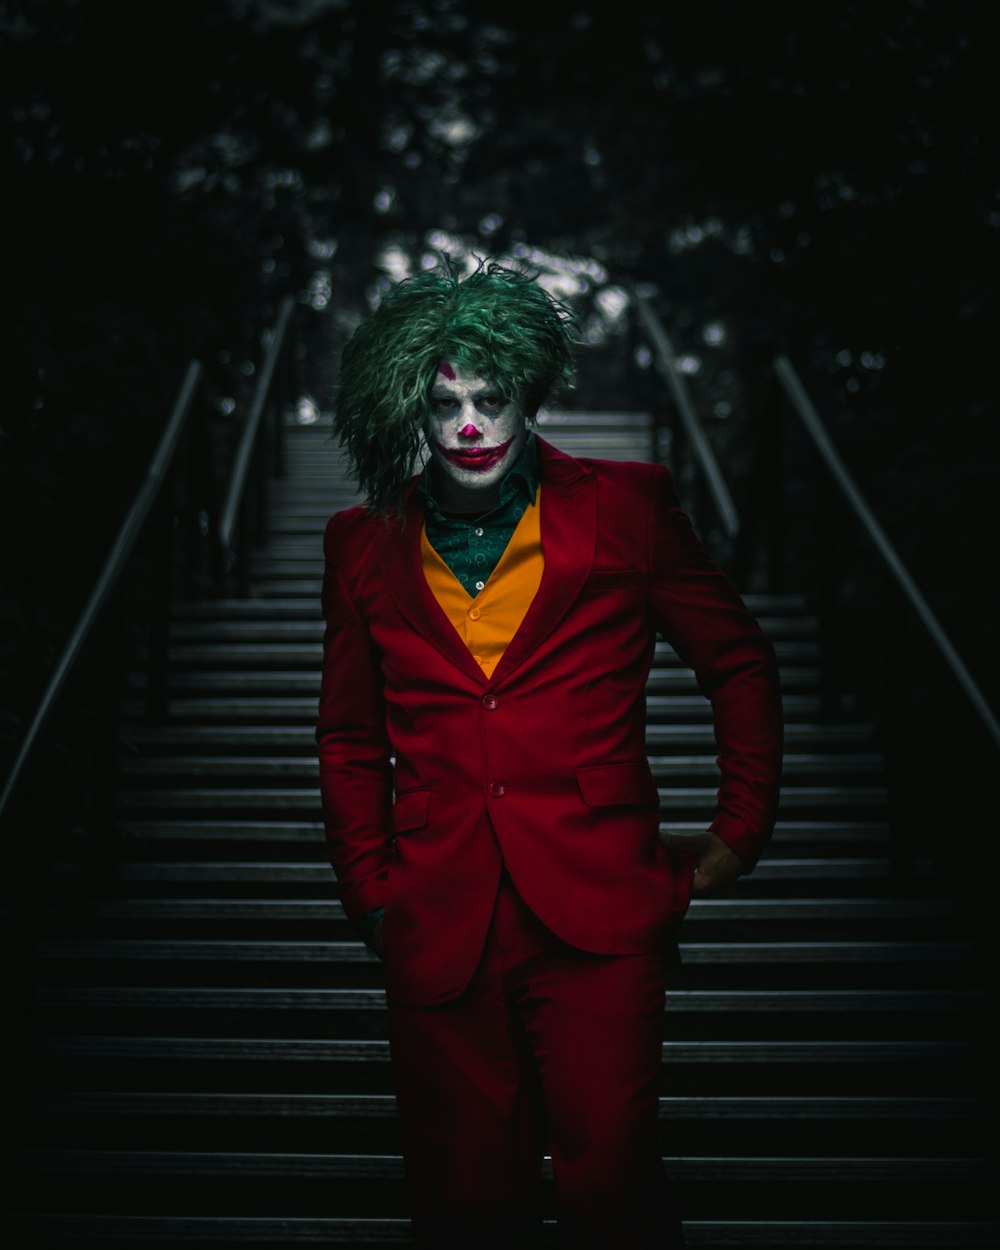 person wearing The Joker costume